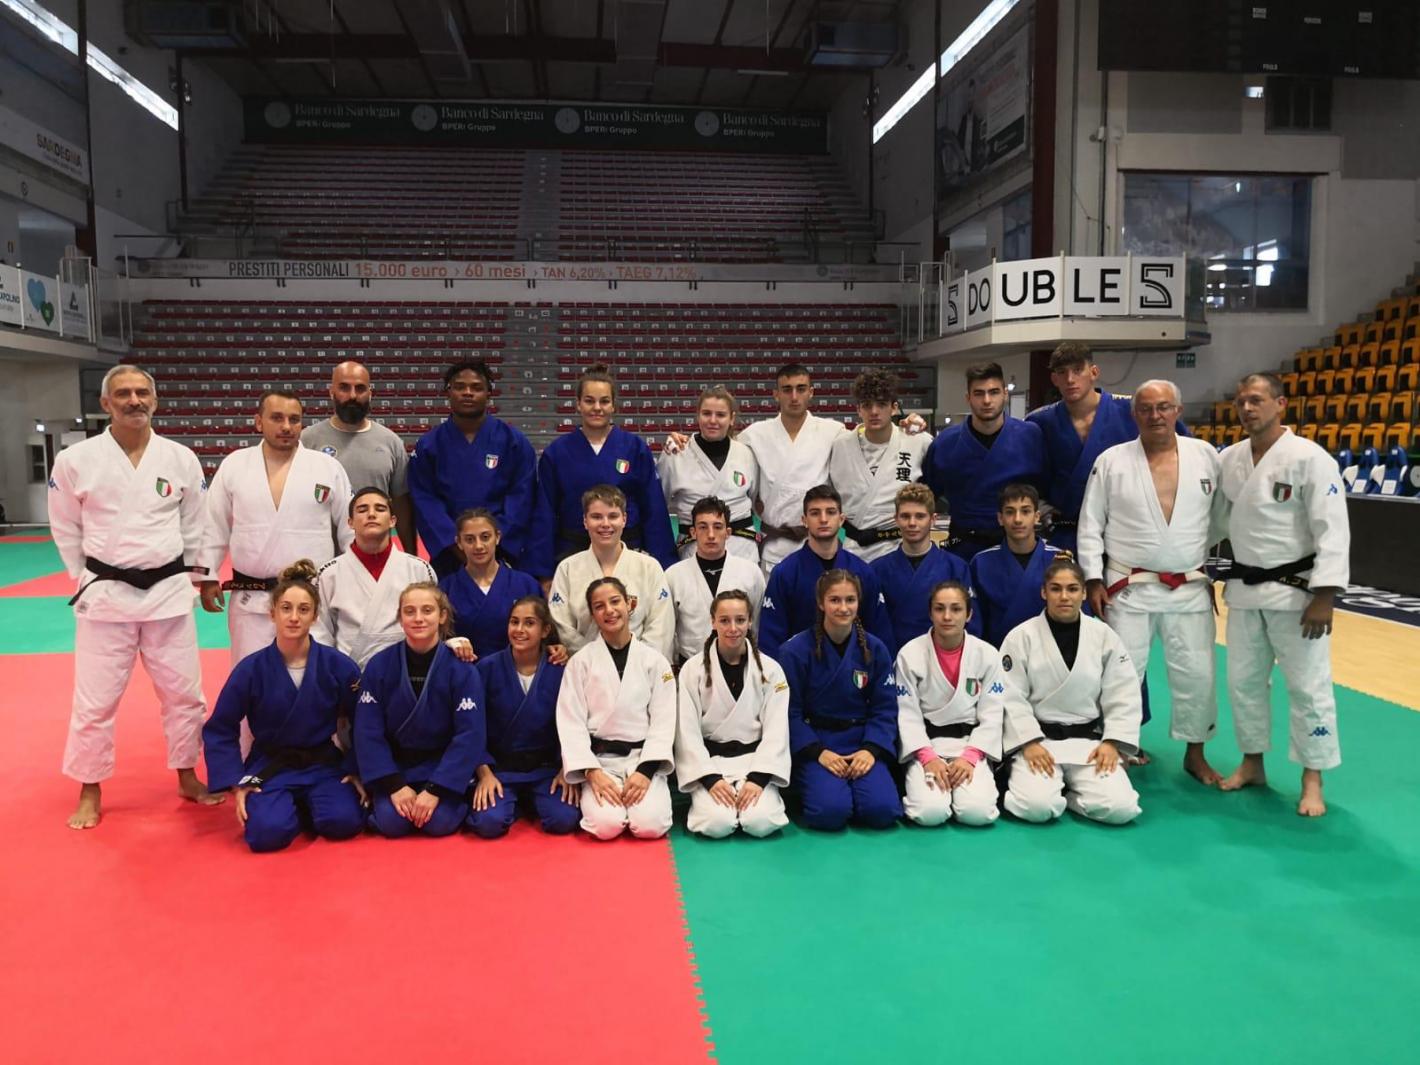 images/veneto/Judo/Gallery_Judo_2019/medium/Nazionale_europei_2019.jpeg